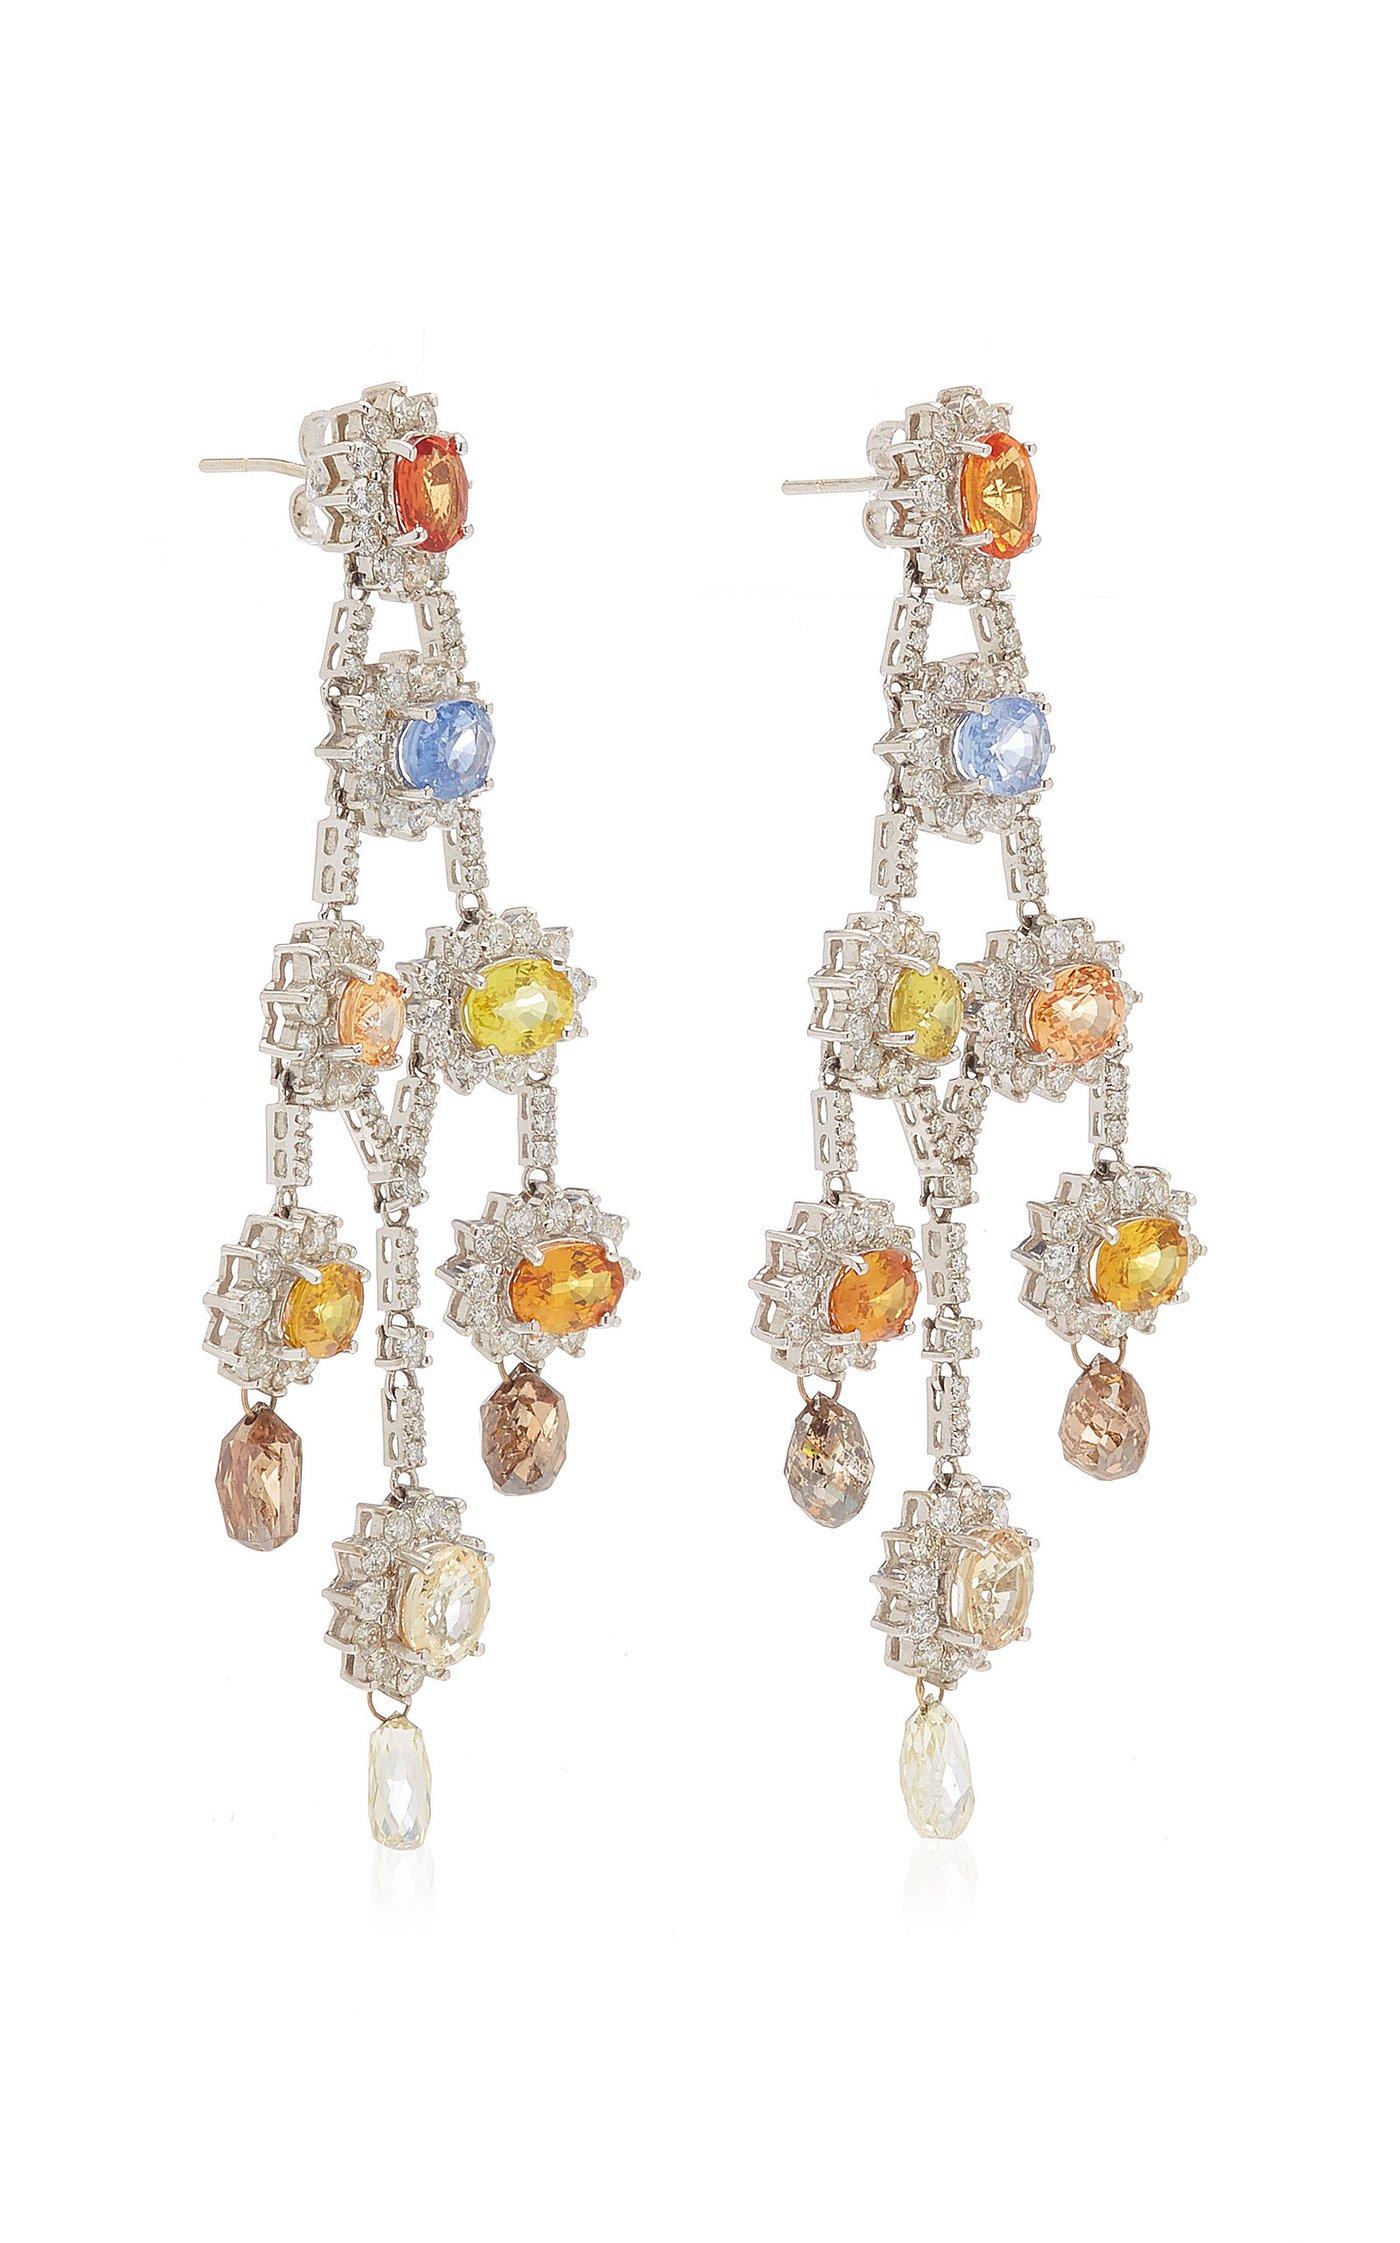 Mixed Cut Multi-Color Sapphire and Diamond Girandole Chandelier Earrings